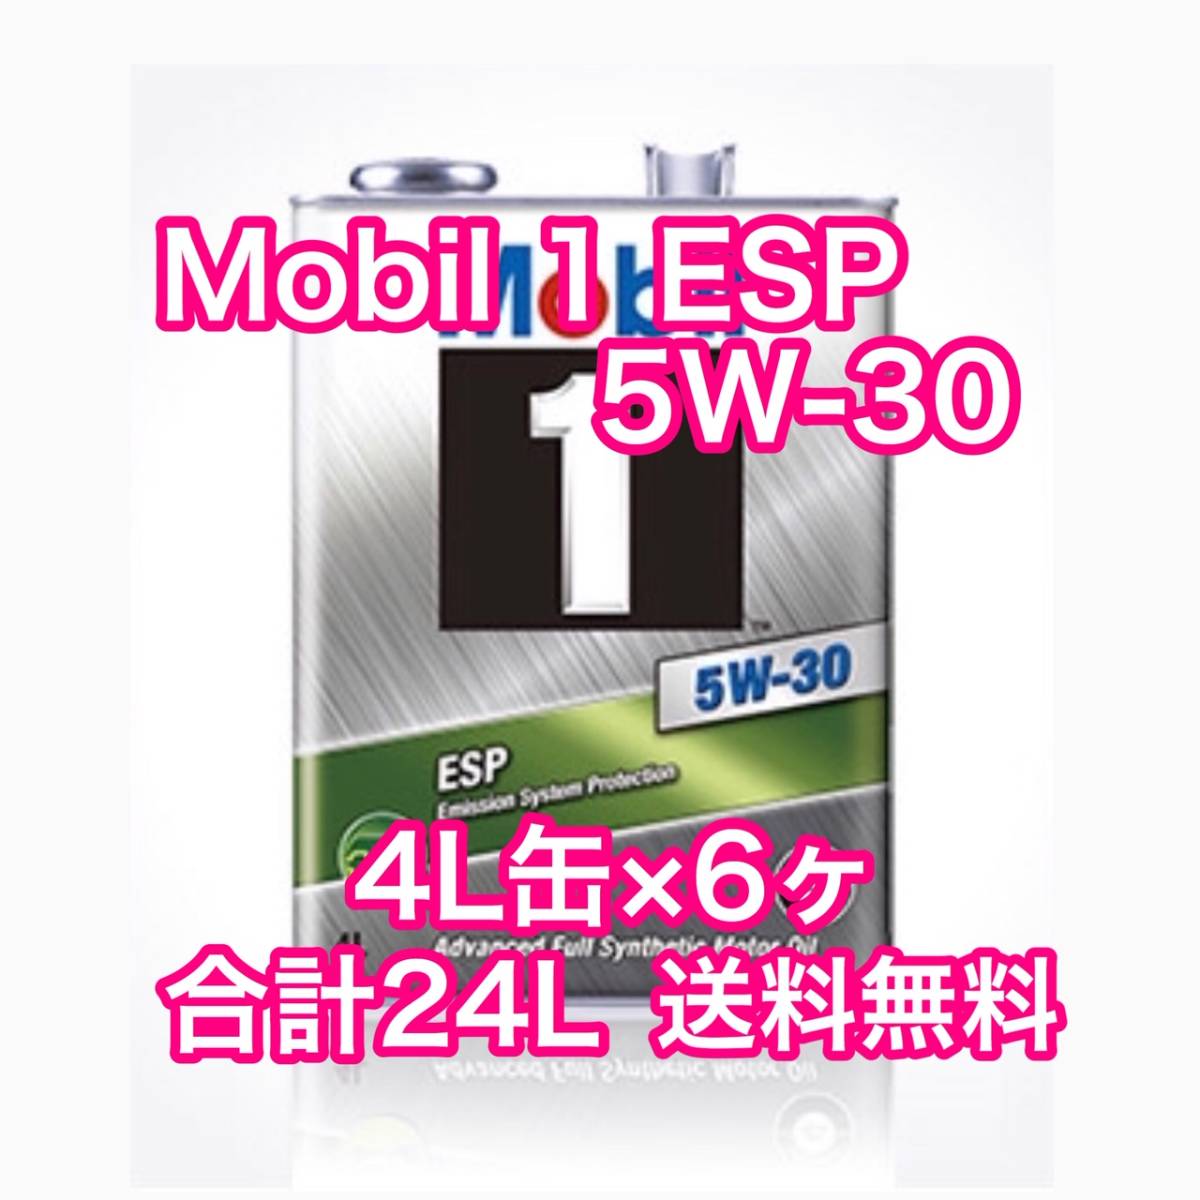 Mobil 1 ESP 5W-30 合計24L モービル1 送料無料_画像1